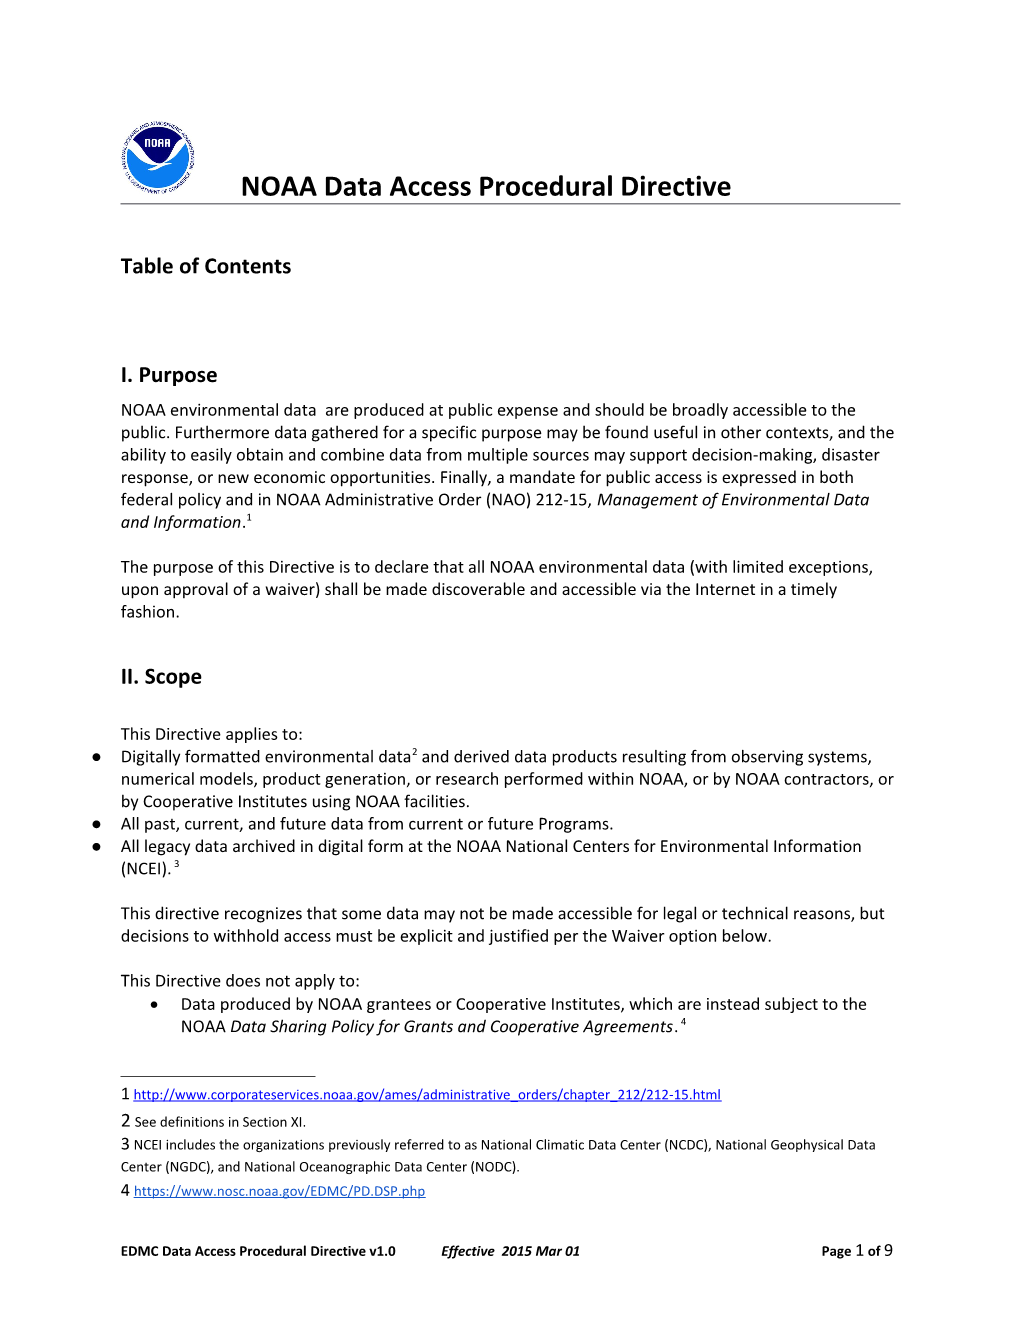 Data Access PD - DRAFT 2014 V0.3.1